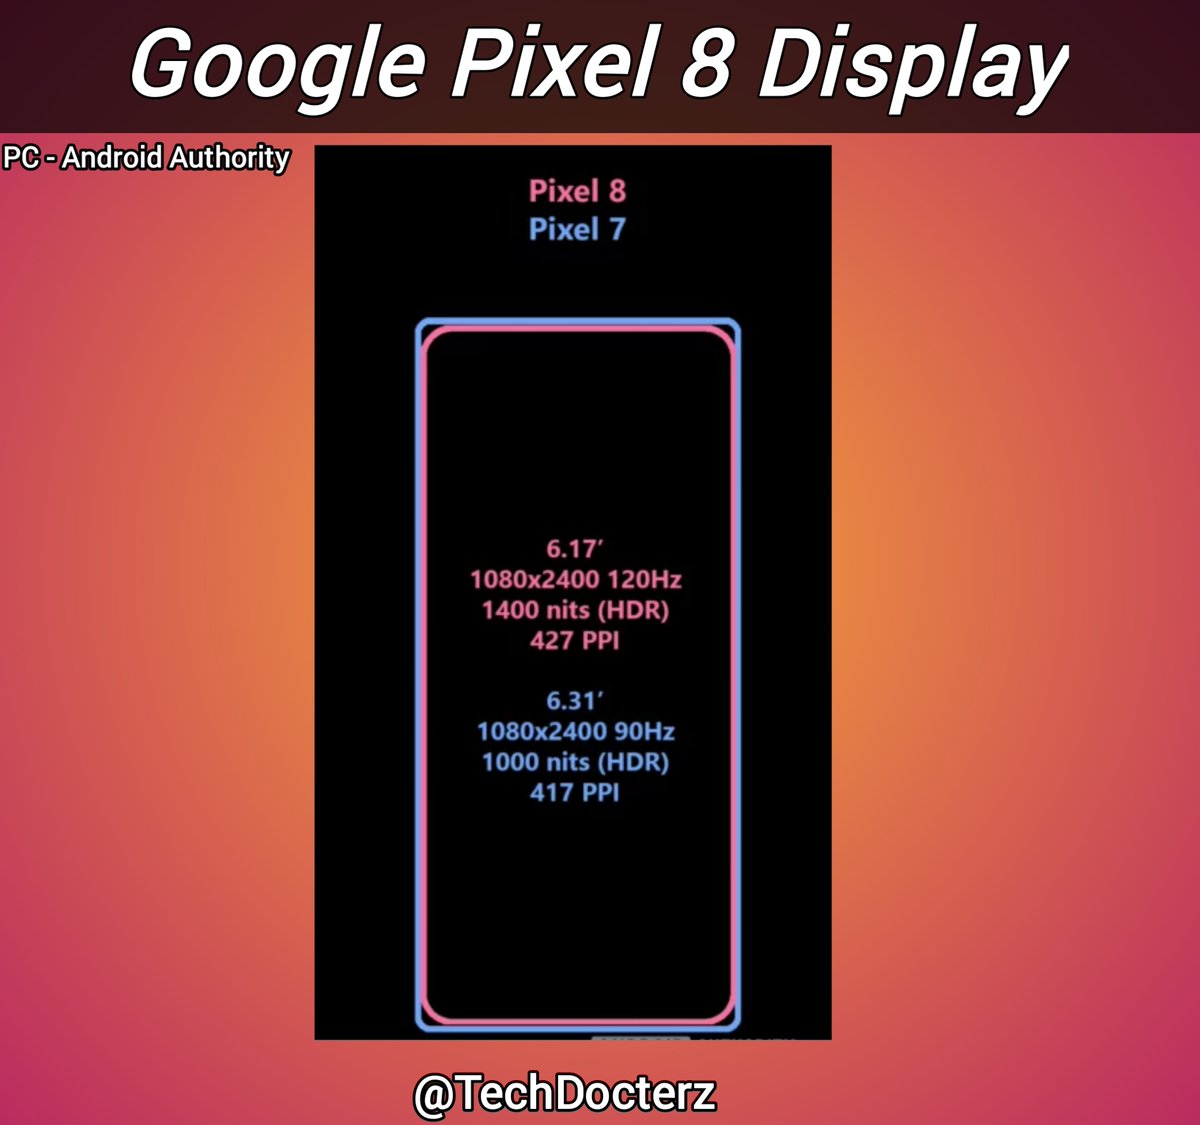 Google Pixel 8 Display info

- 6.17-inch display size
- 2400 x 1080 Pixel Resolution
- 427 PPI
- 1400 nits Peak Brightness
- 10Hz, 30Hz, 60Hz, and 120Hz variable refresh rate
- Flat Display

#Google #GooglePixel8